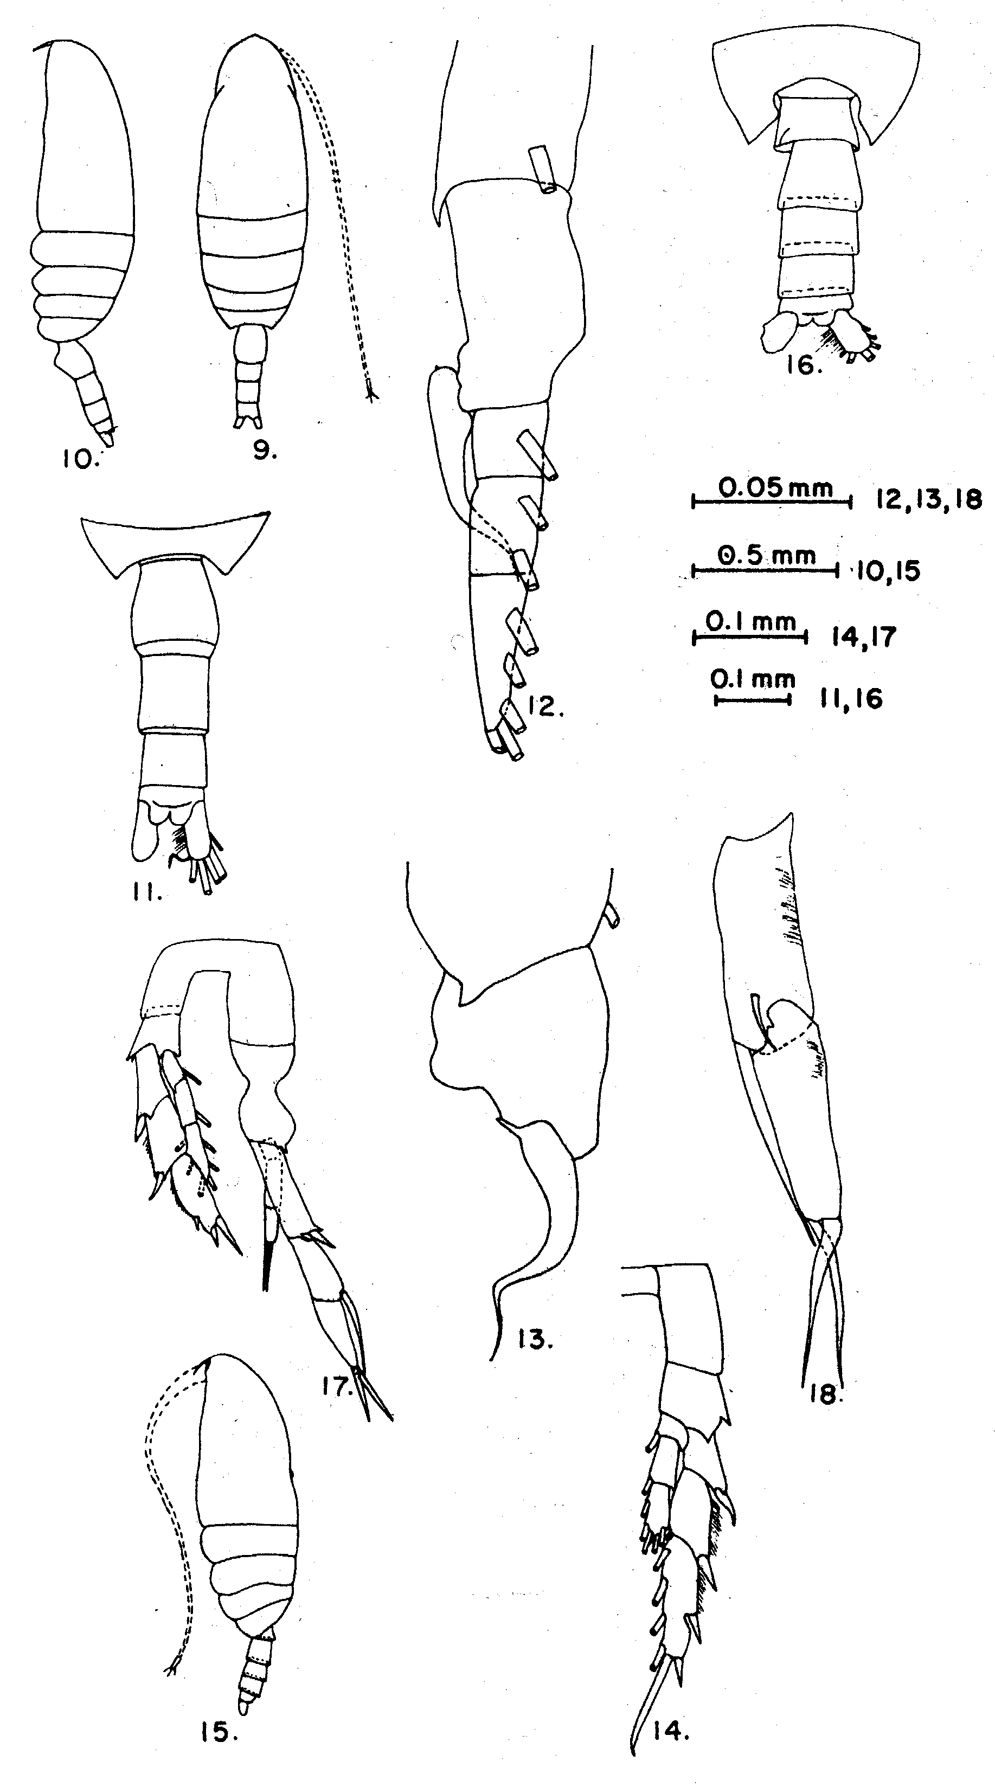 Species Canthocalanus pauper - Plate 6 of morphological figures